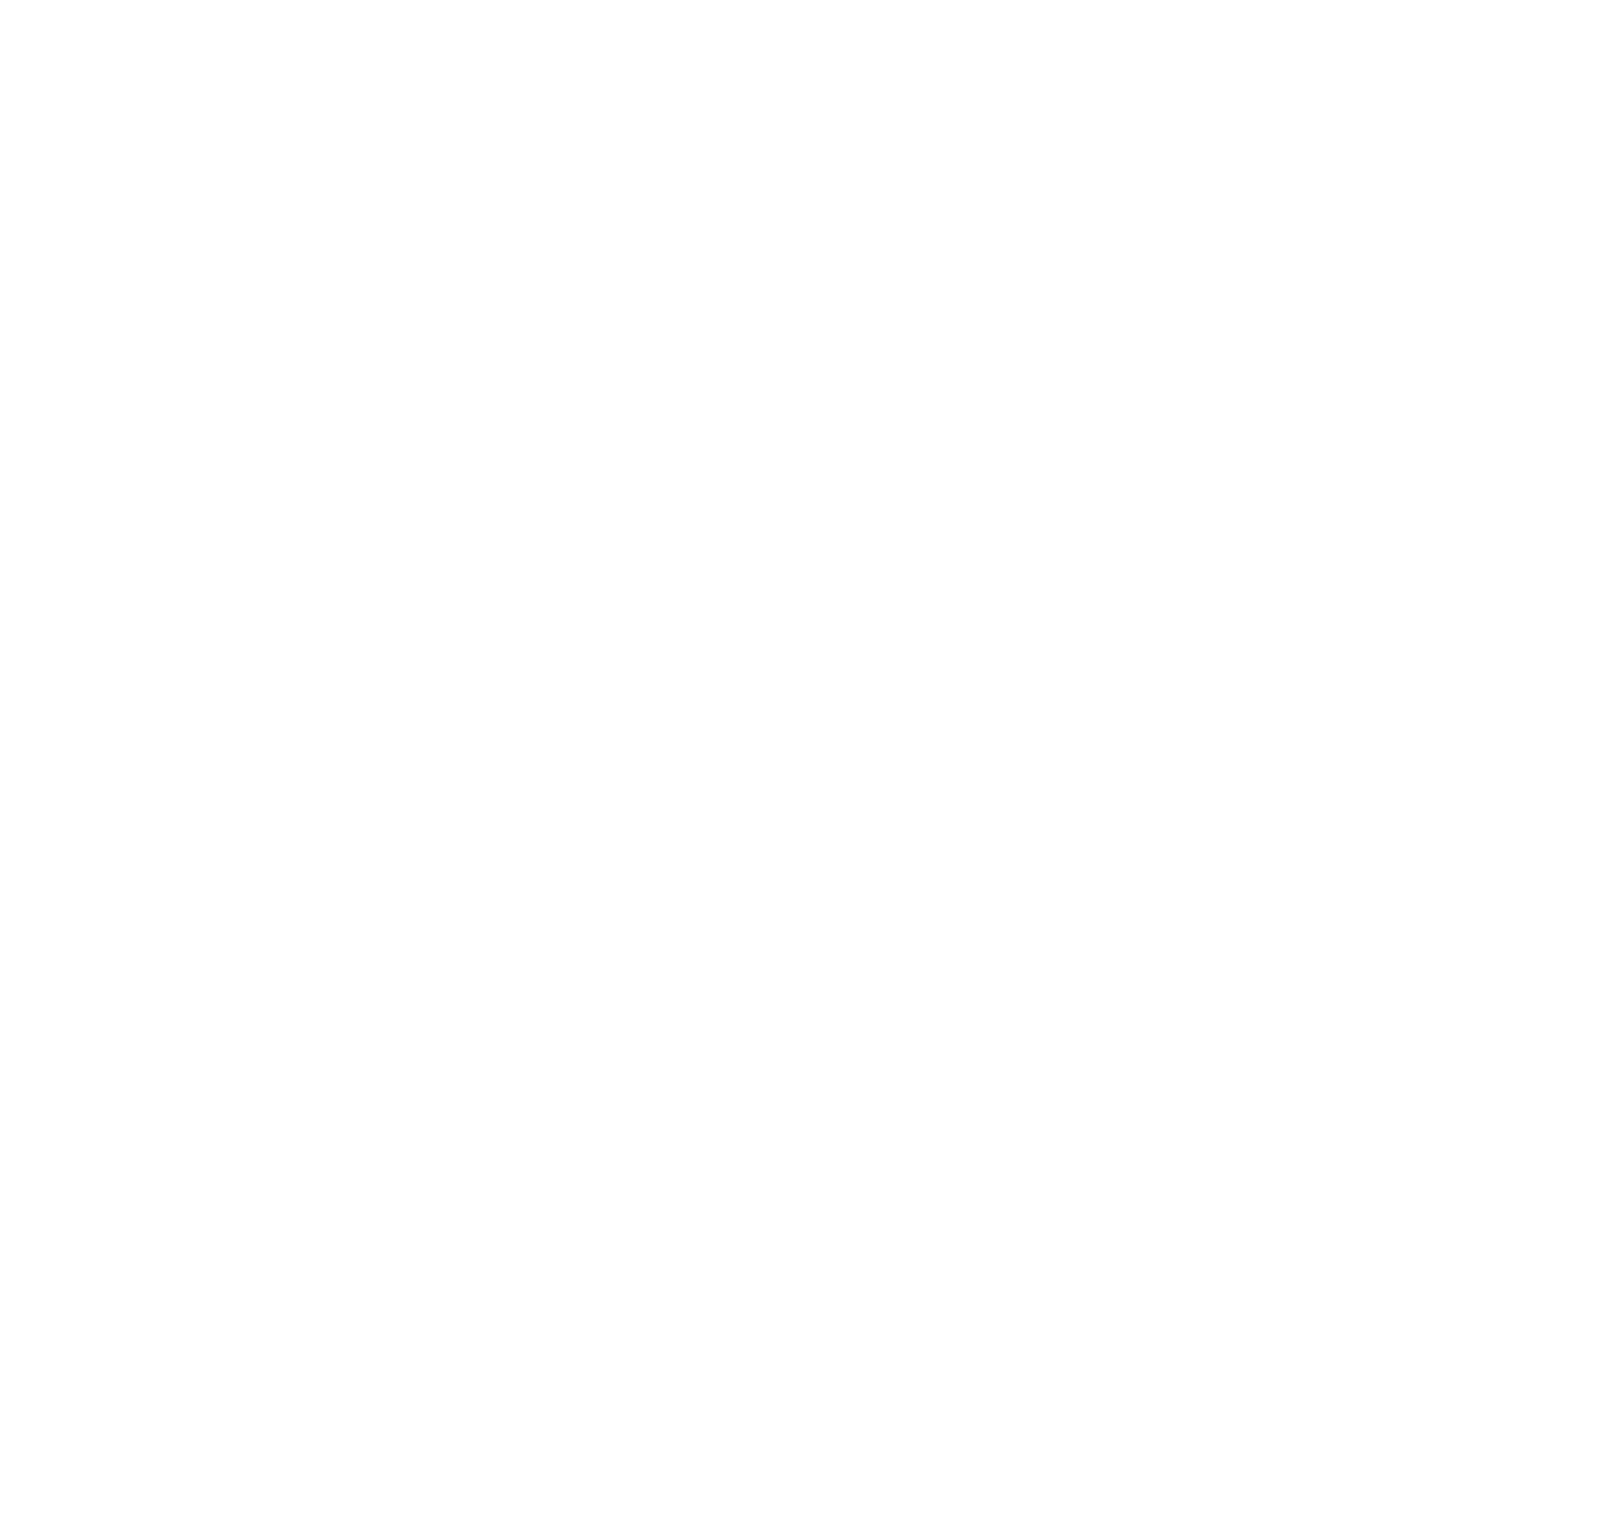 H2 AUTOMOTIVE CHALLENGE